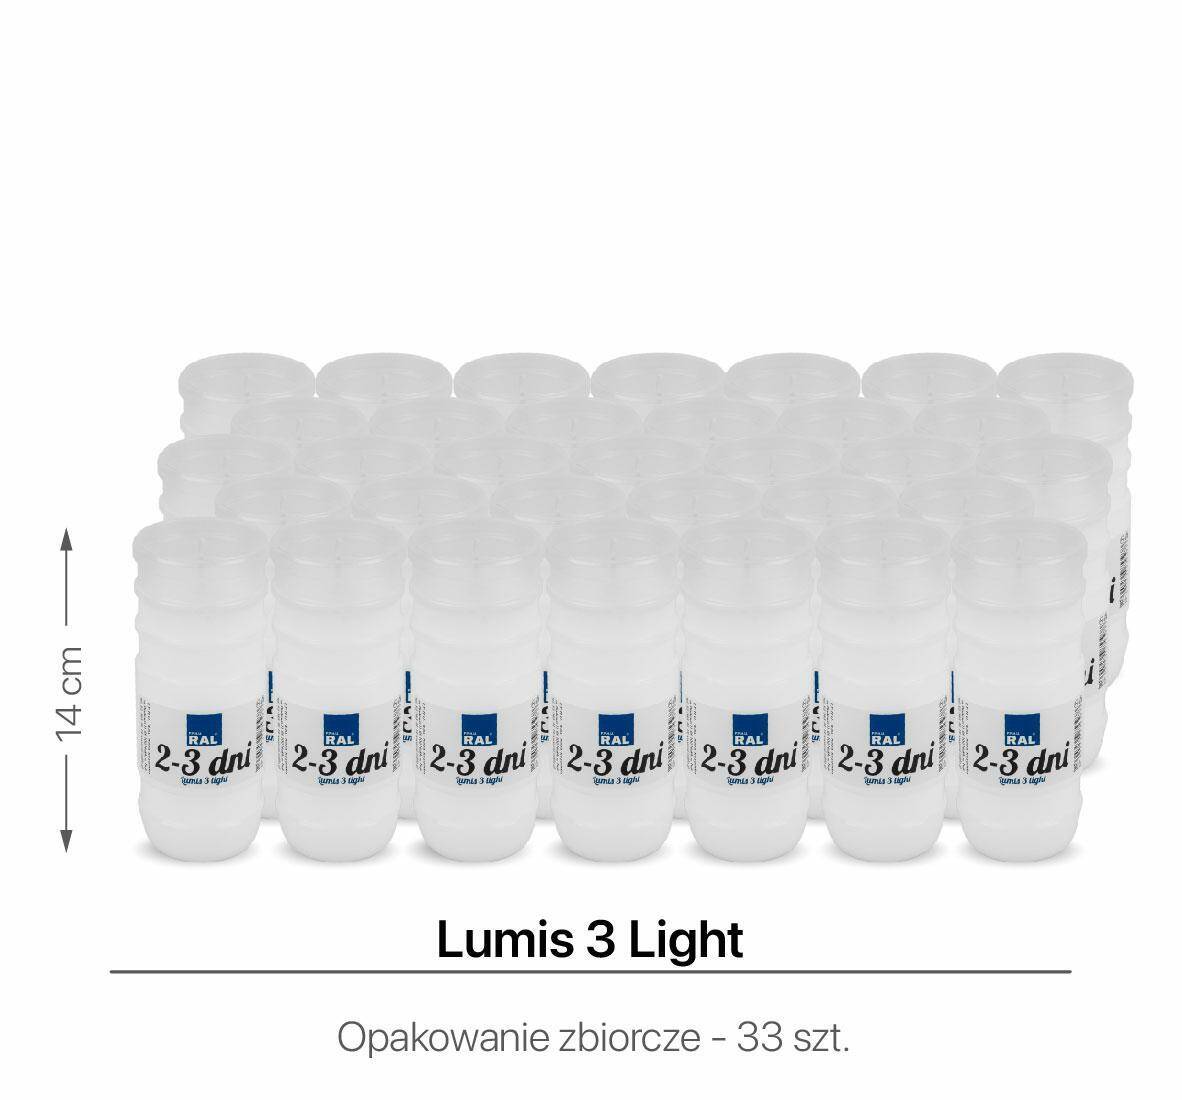 Lumis 3 Light (opakowanie 33 szt.)